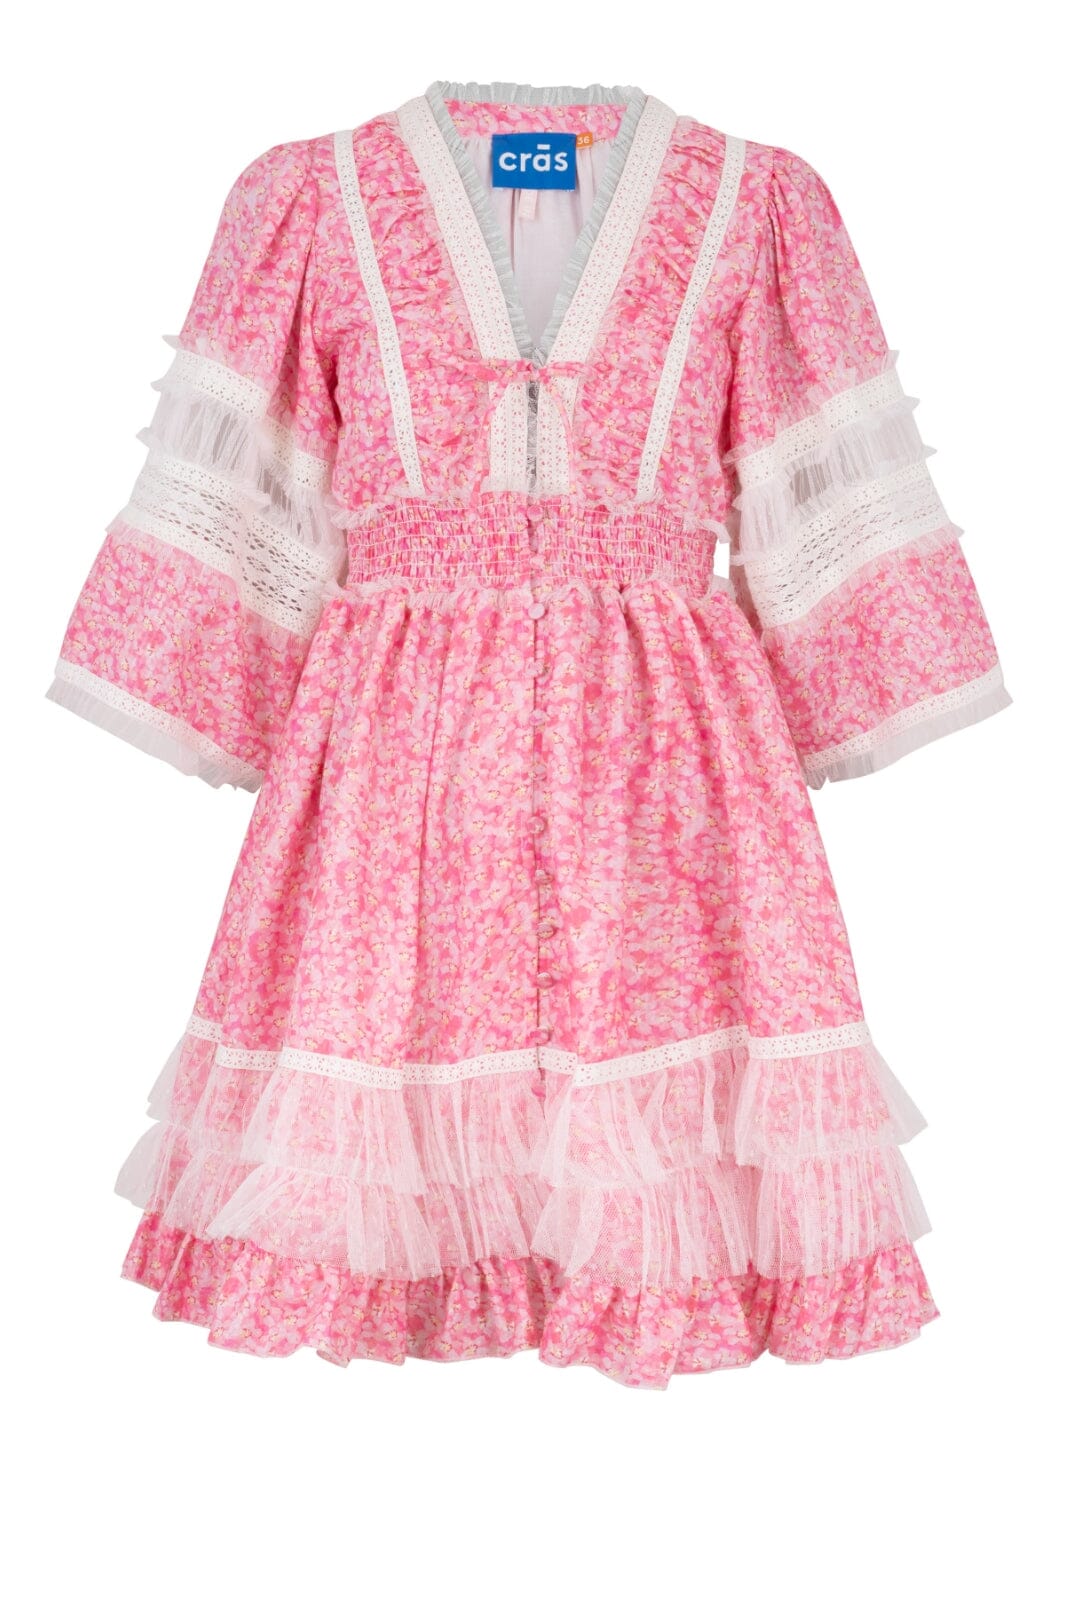 Cras - Edencras Dress - 8010 Seer Pink Kjoler 